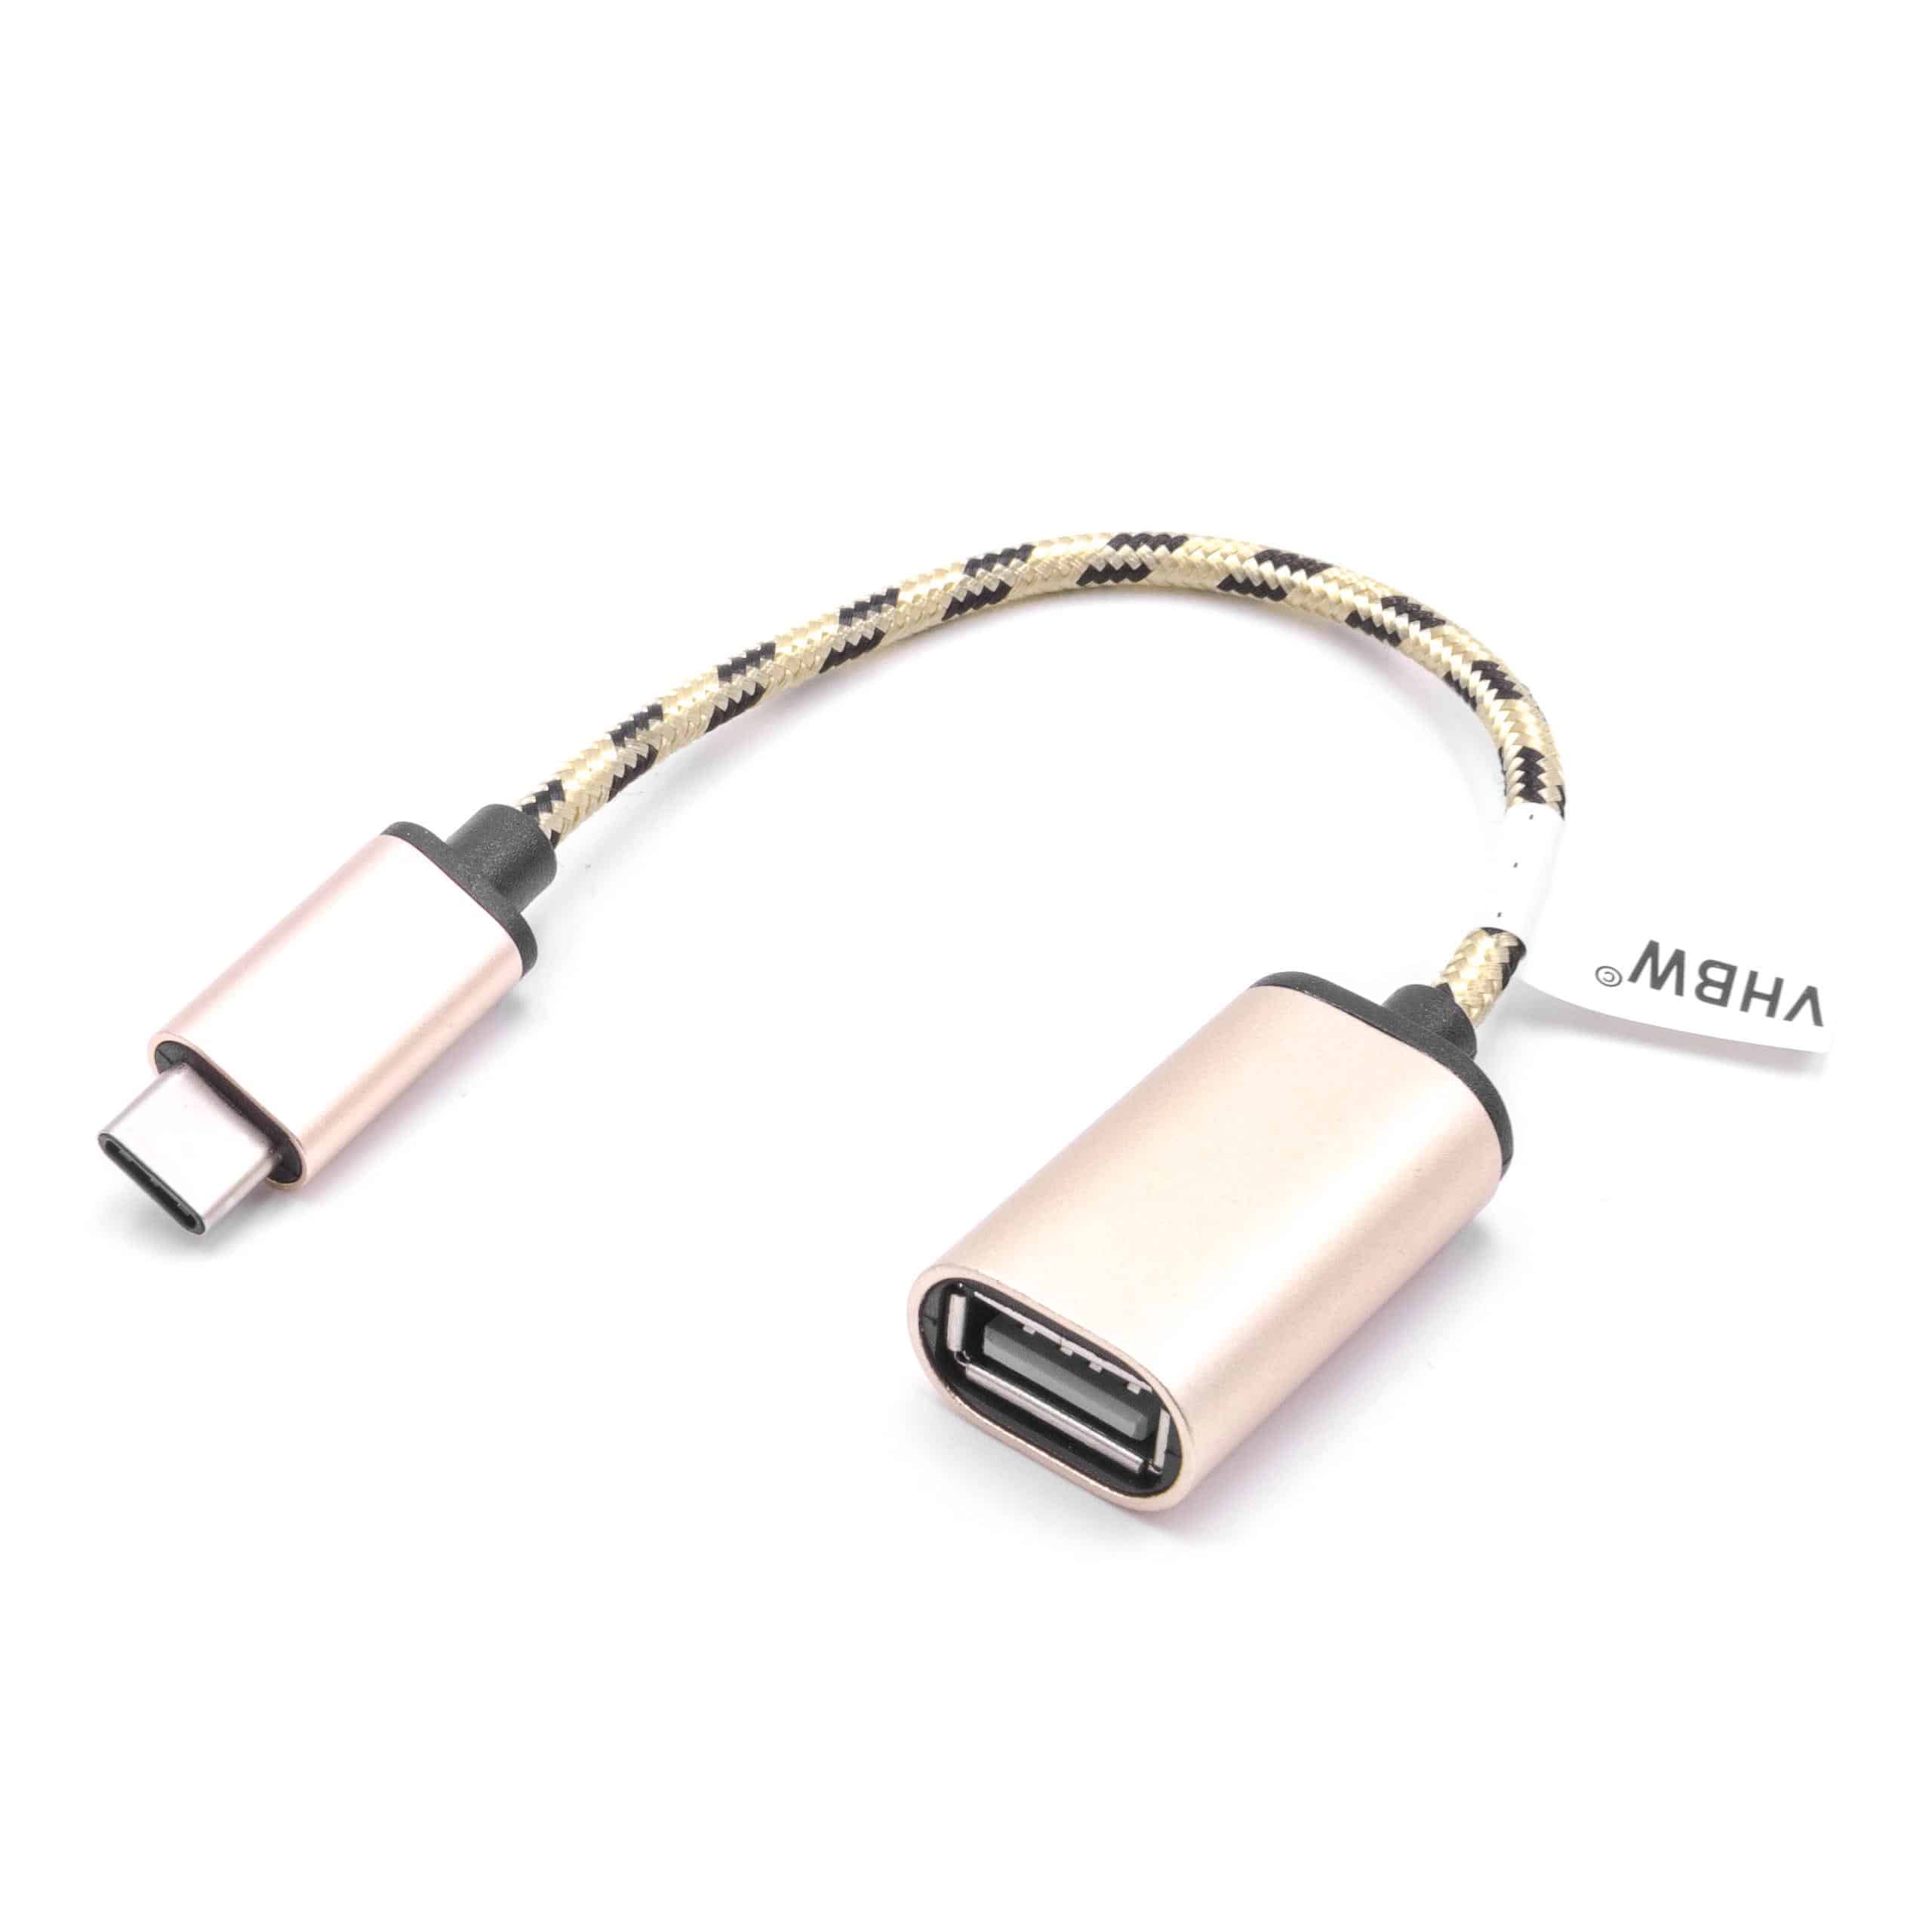 Adattatore OTG dapresa USB-3.1 tipo C a connettore USB 2.0 A per smartphone, tablet, laptop